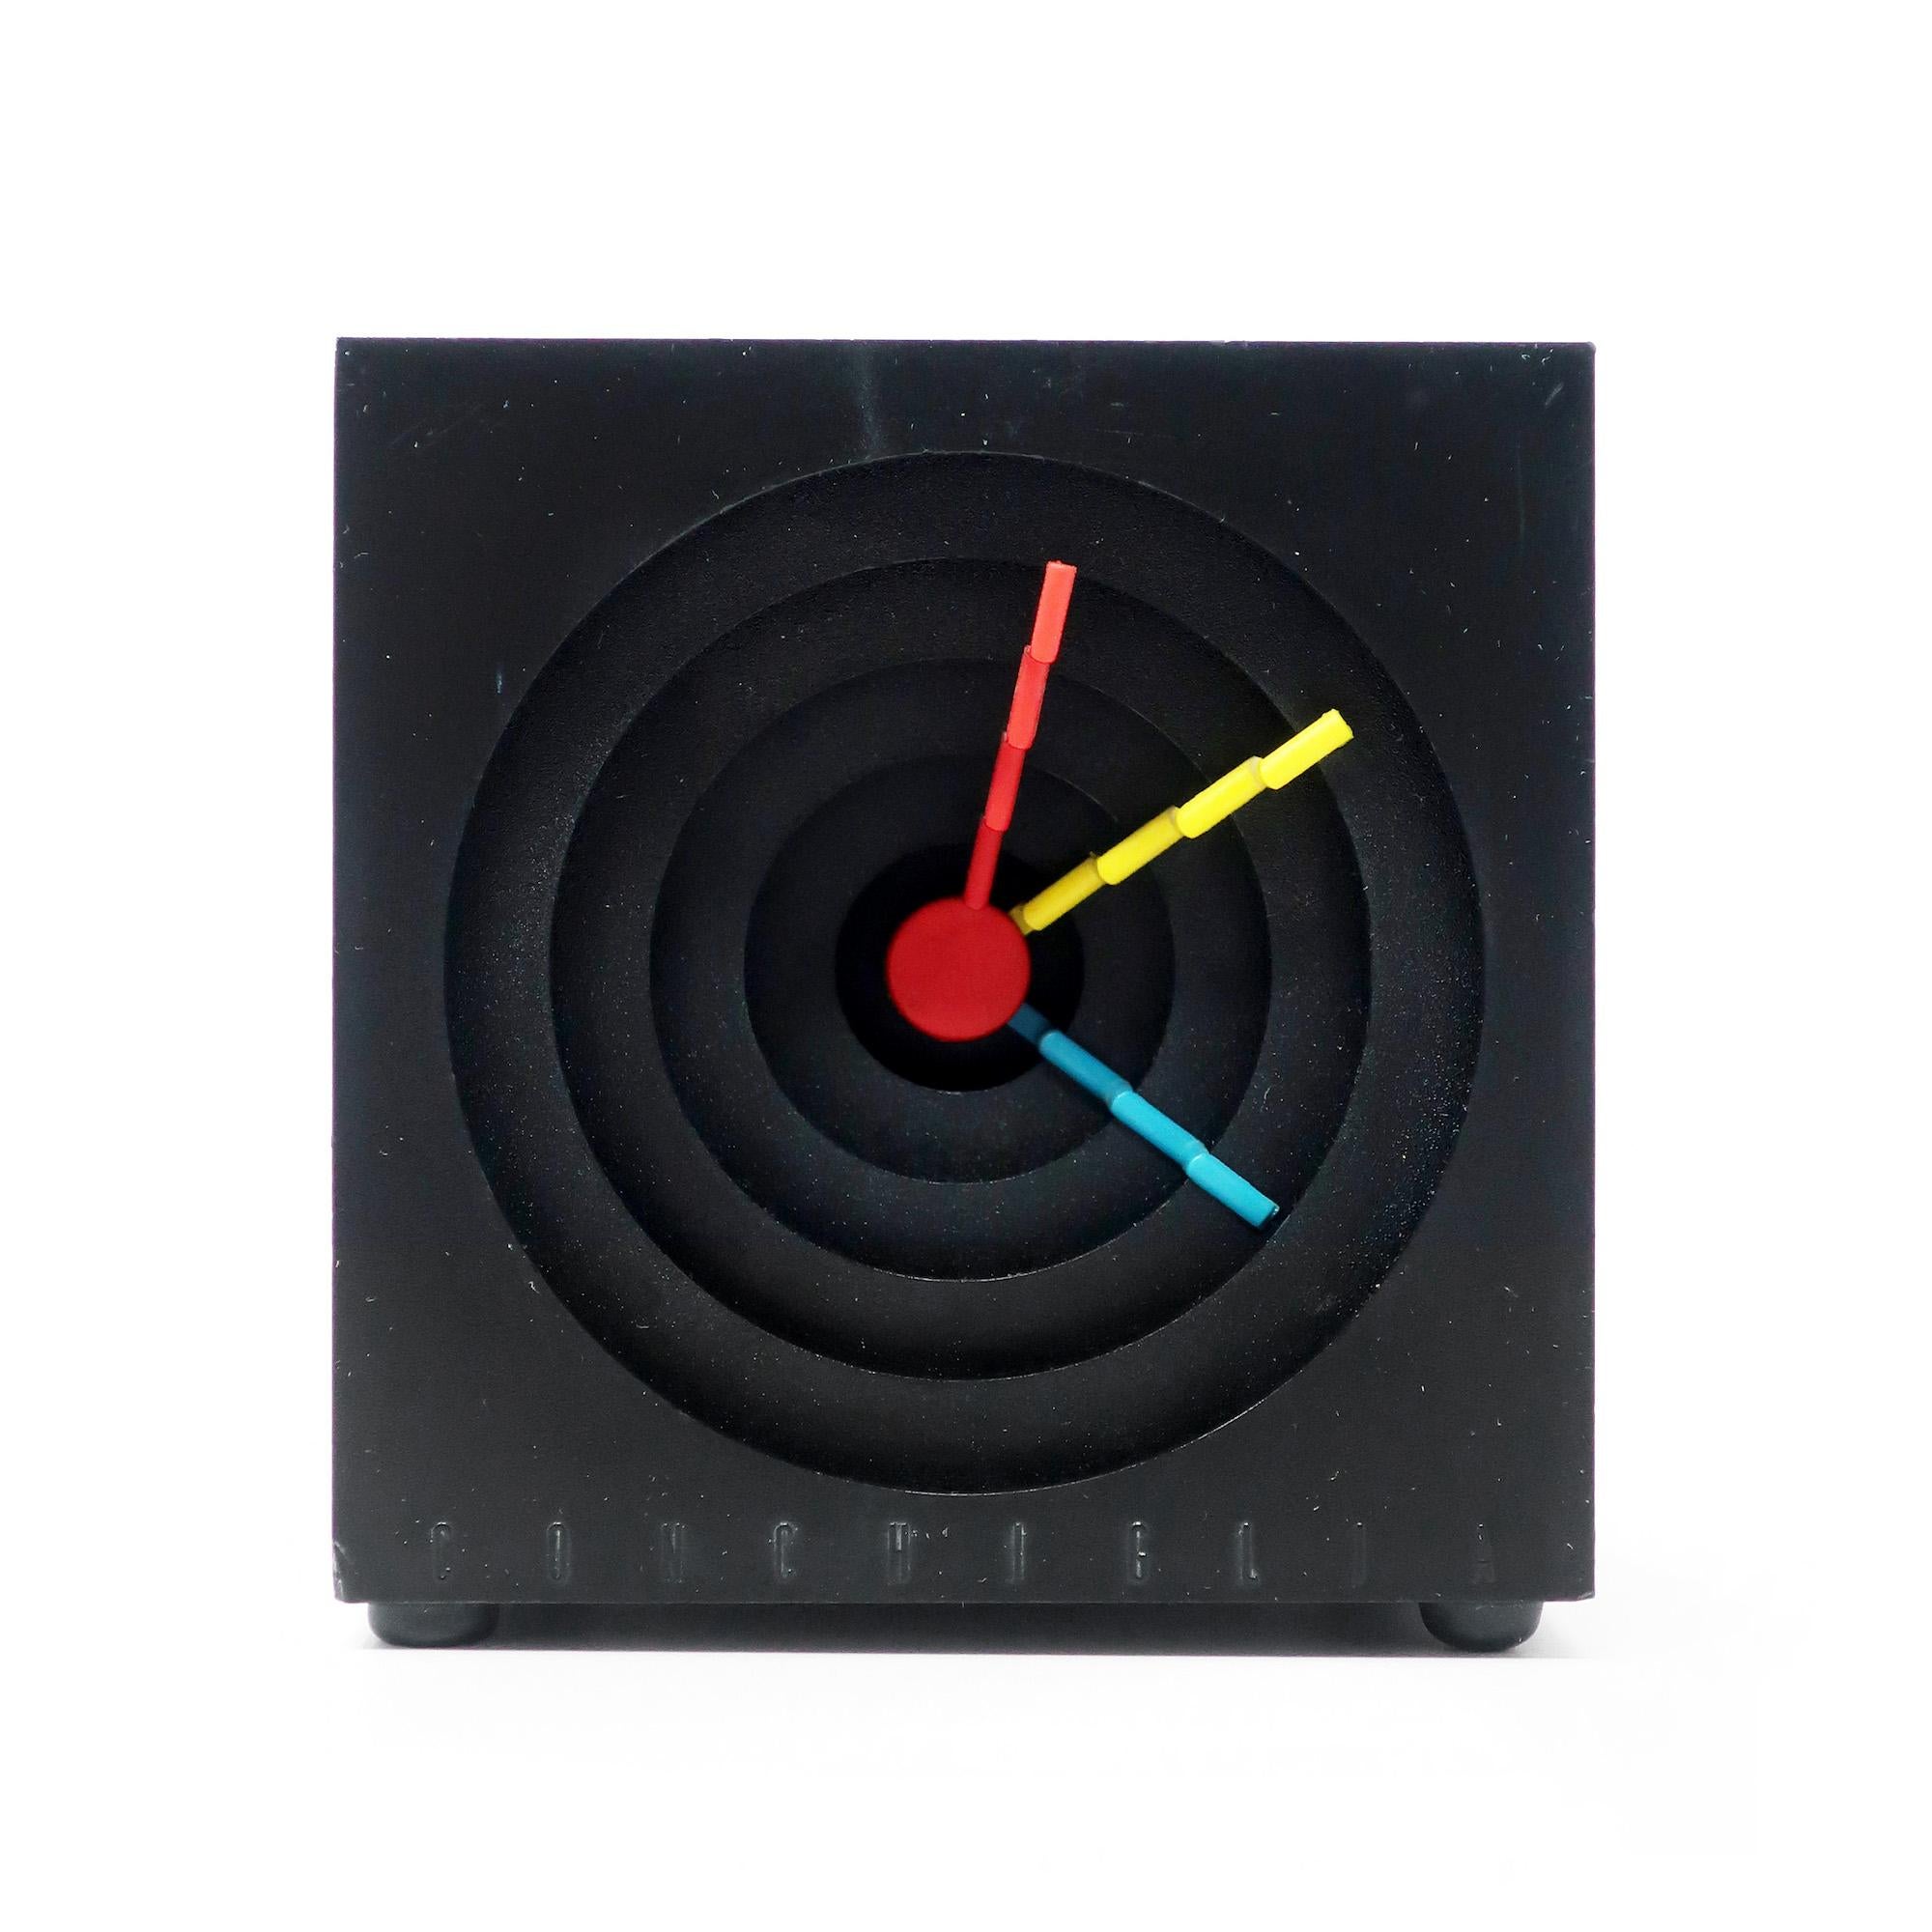 1988 Italian Conchiglia Desk Clock by Winning Ideas In Good Condition For Sale In Brooklyn, NY